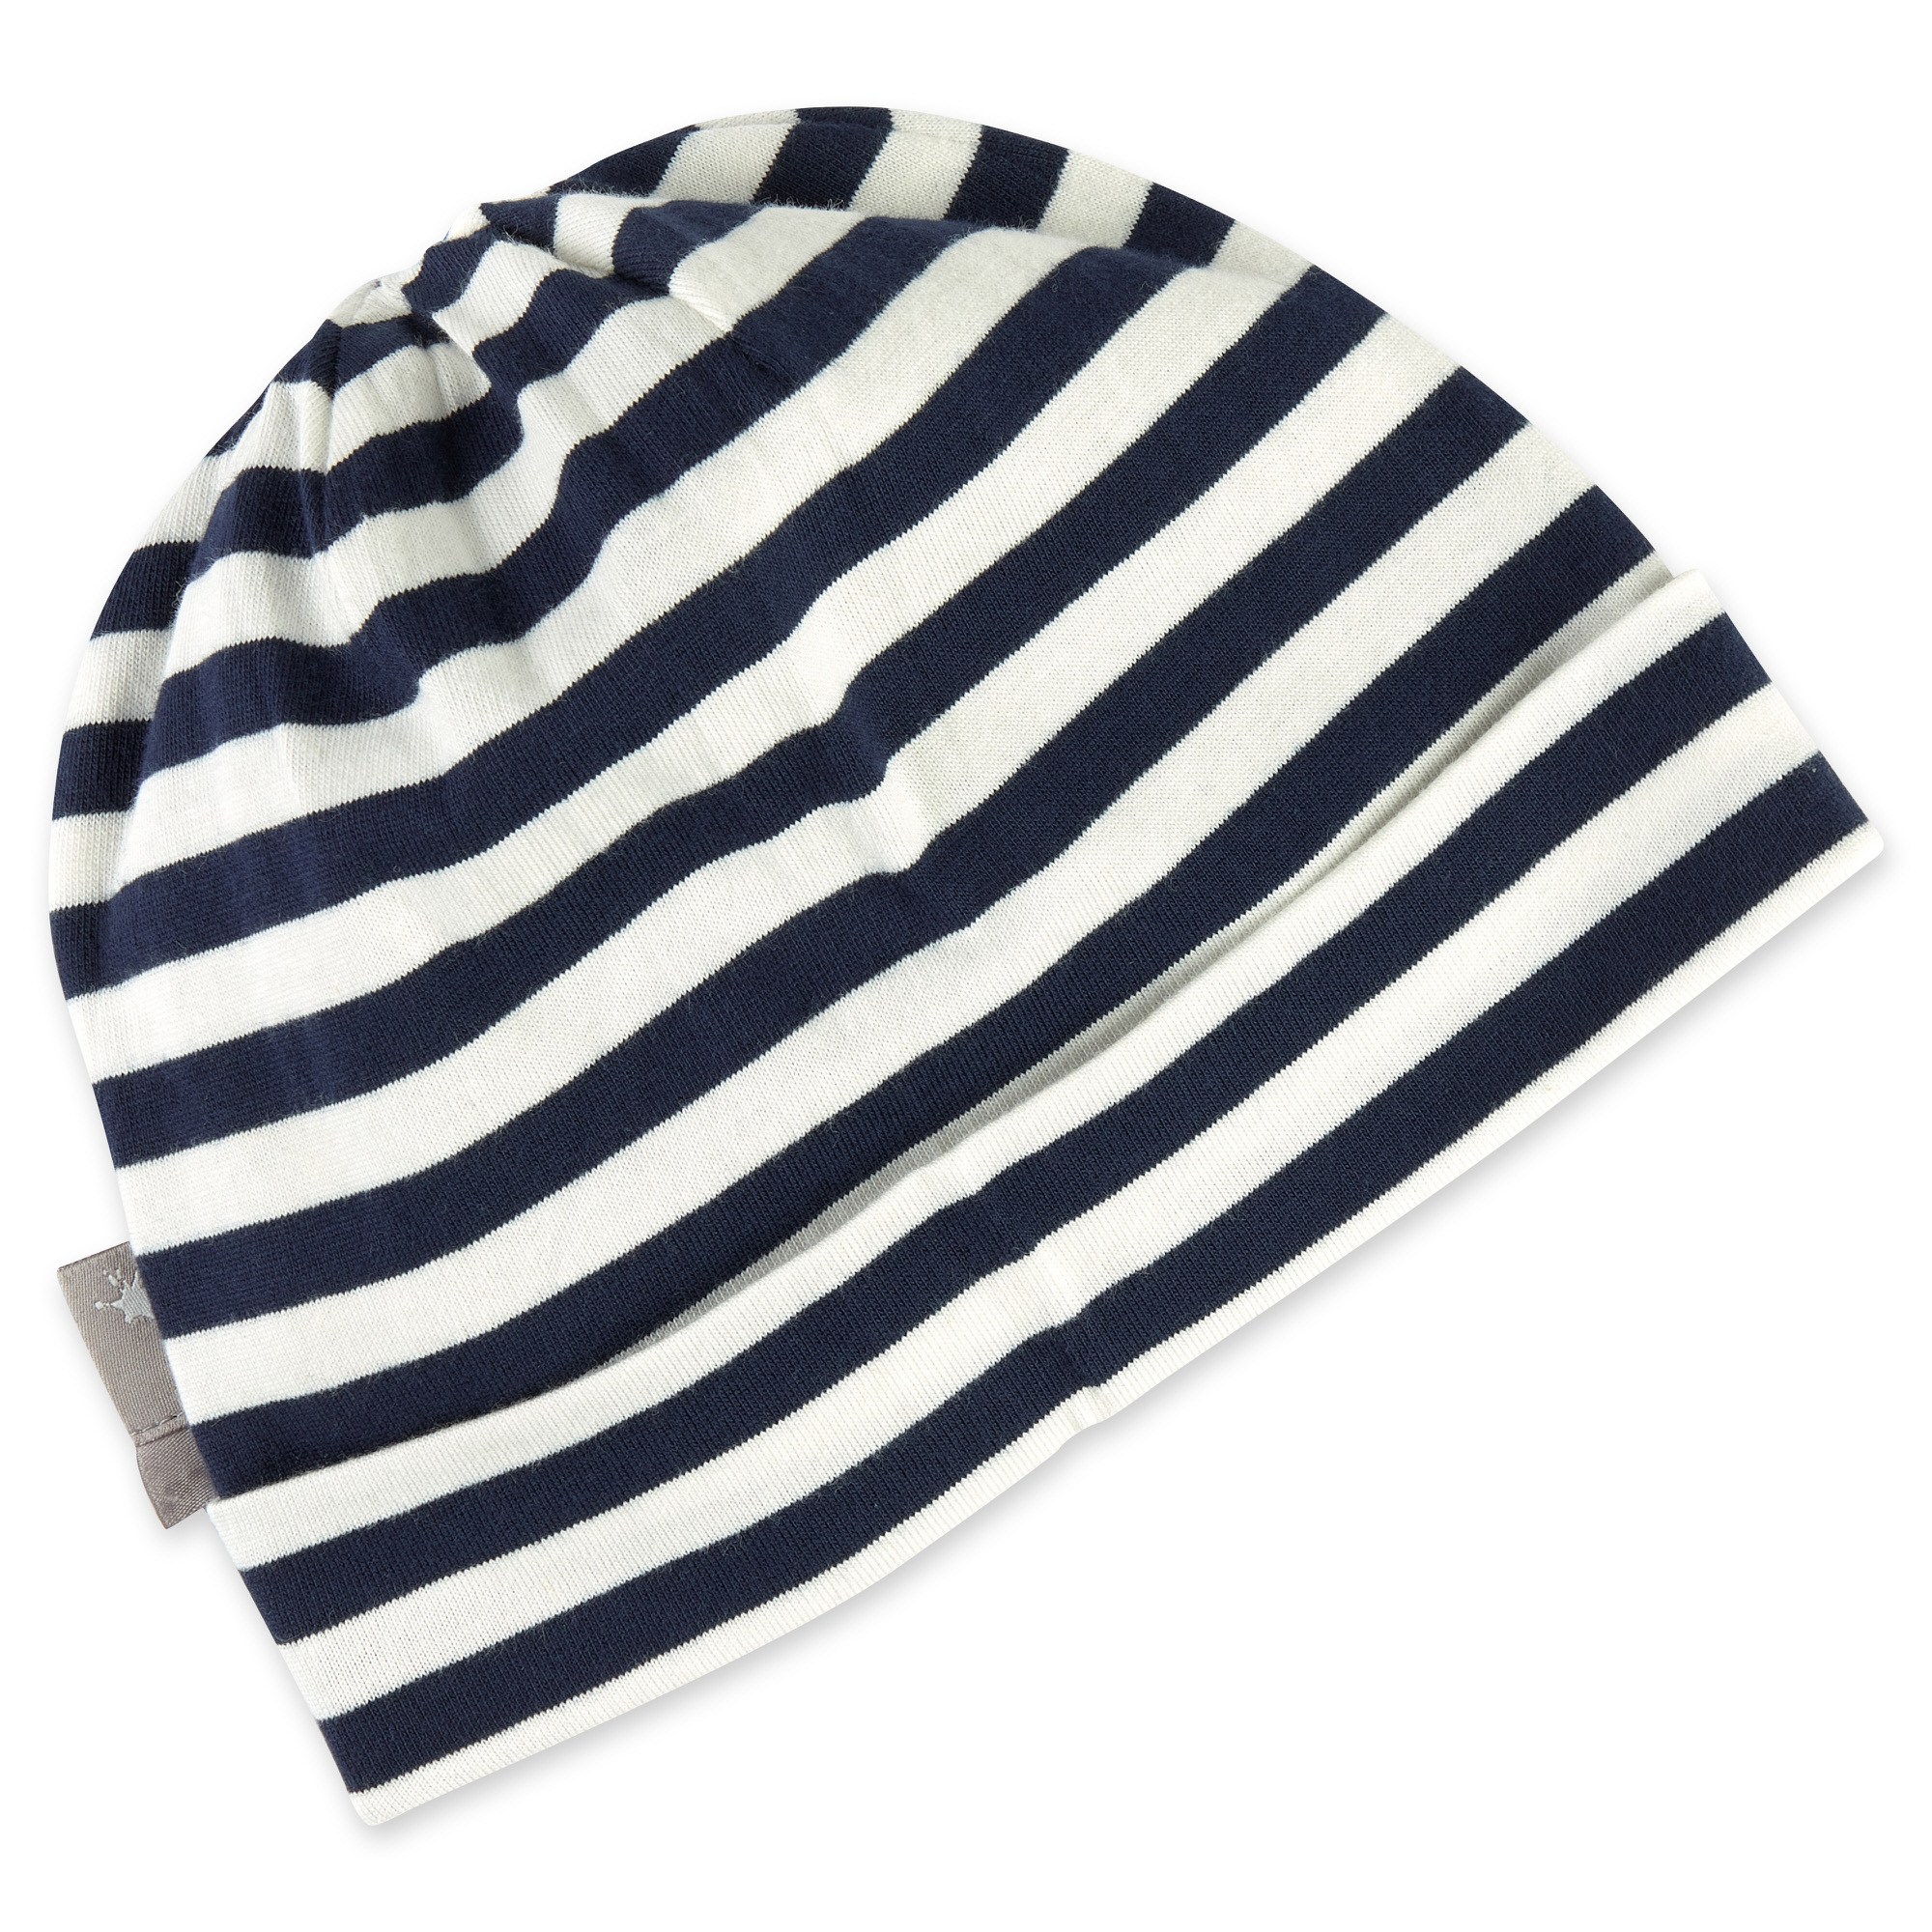 Snug baby beanie hat with foldup, navy/white